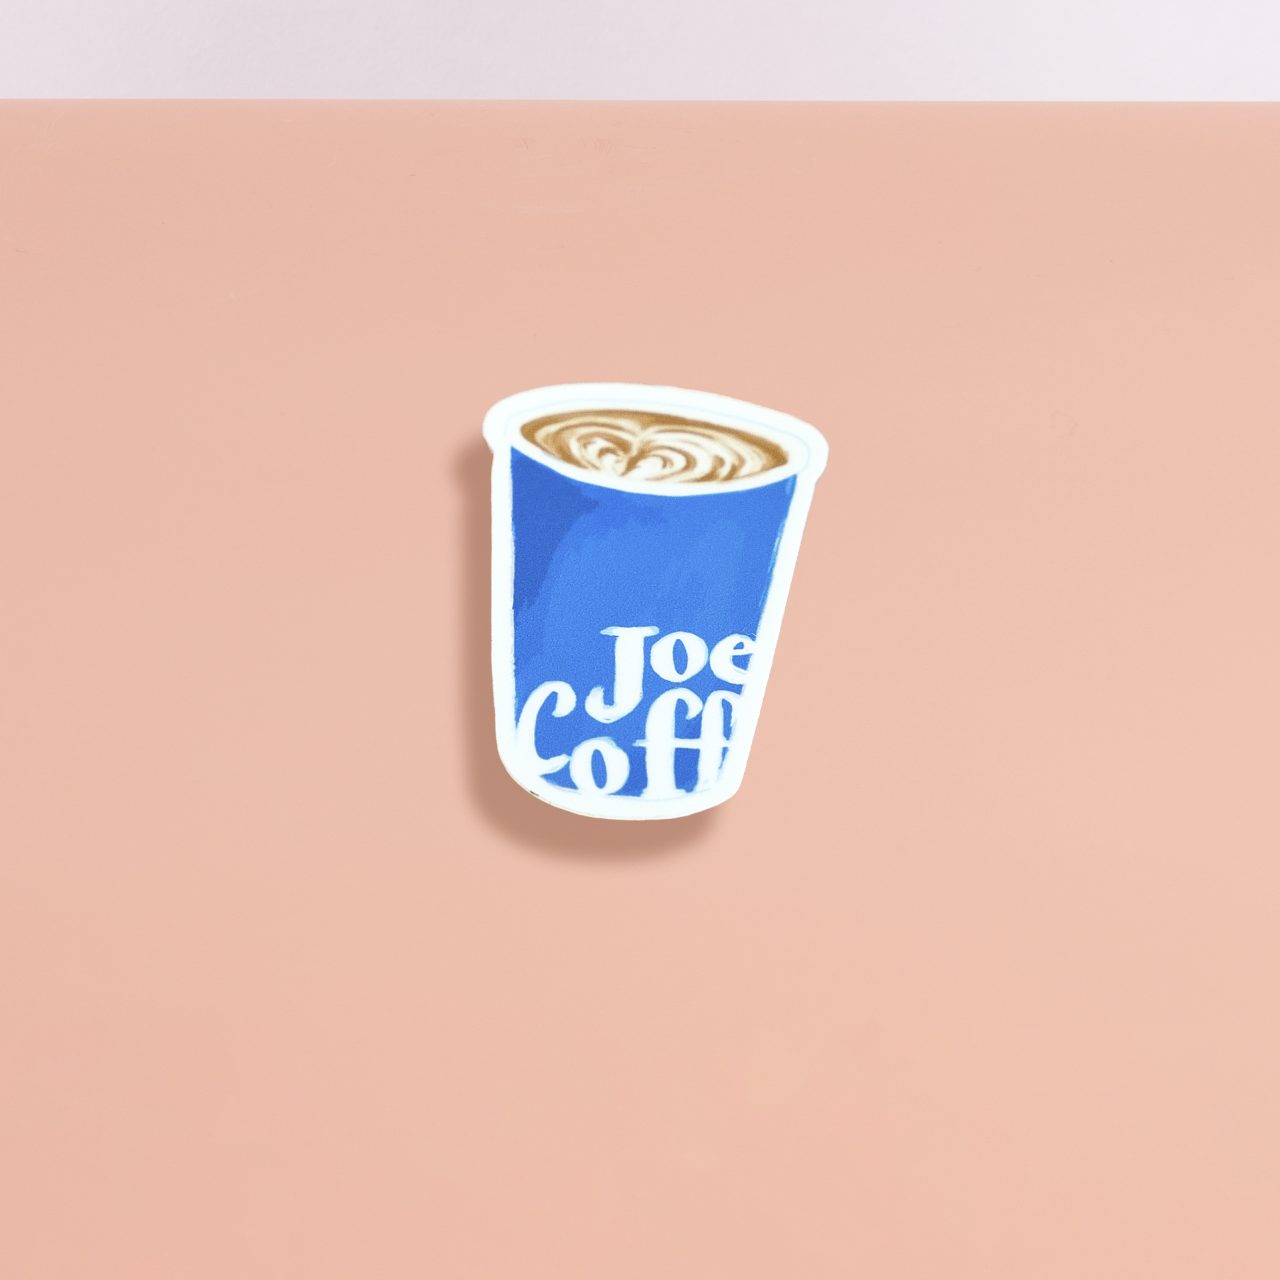 Sticker of a Joe Coffee Cup with latte art